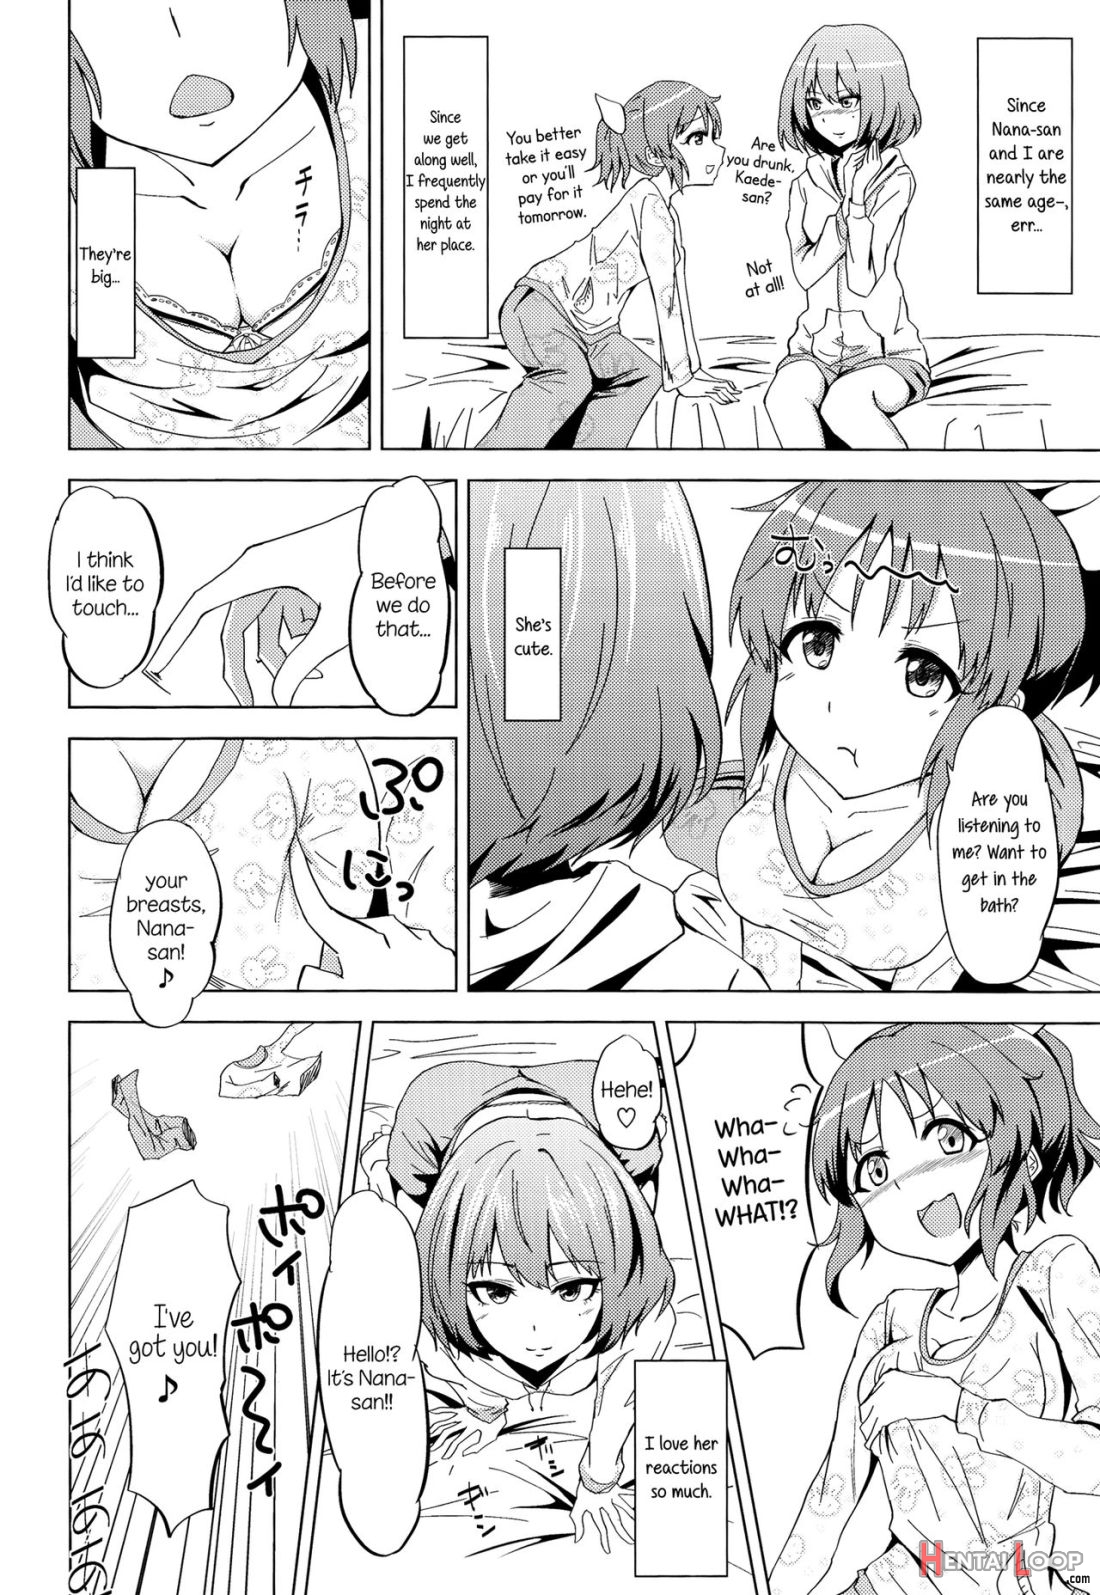 Kaede-san No Nana Ijiri page 6